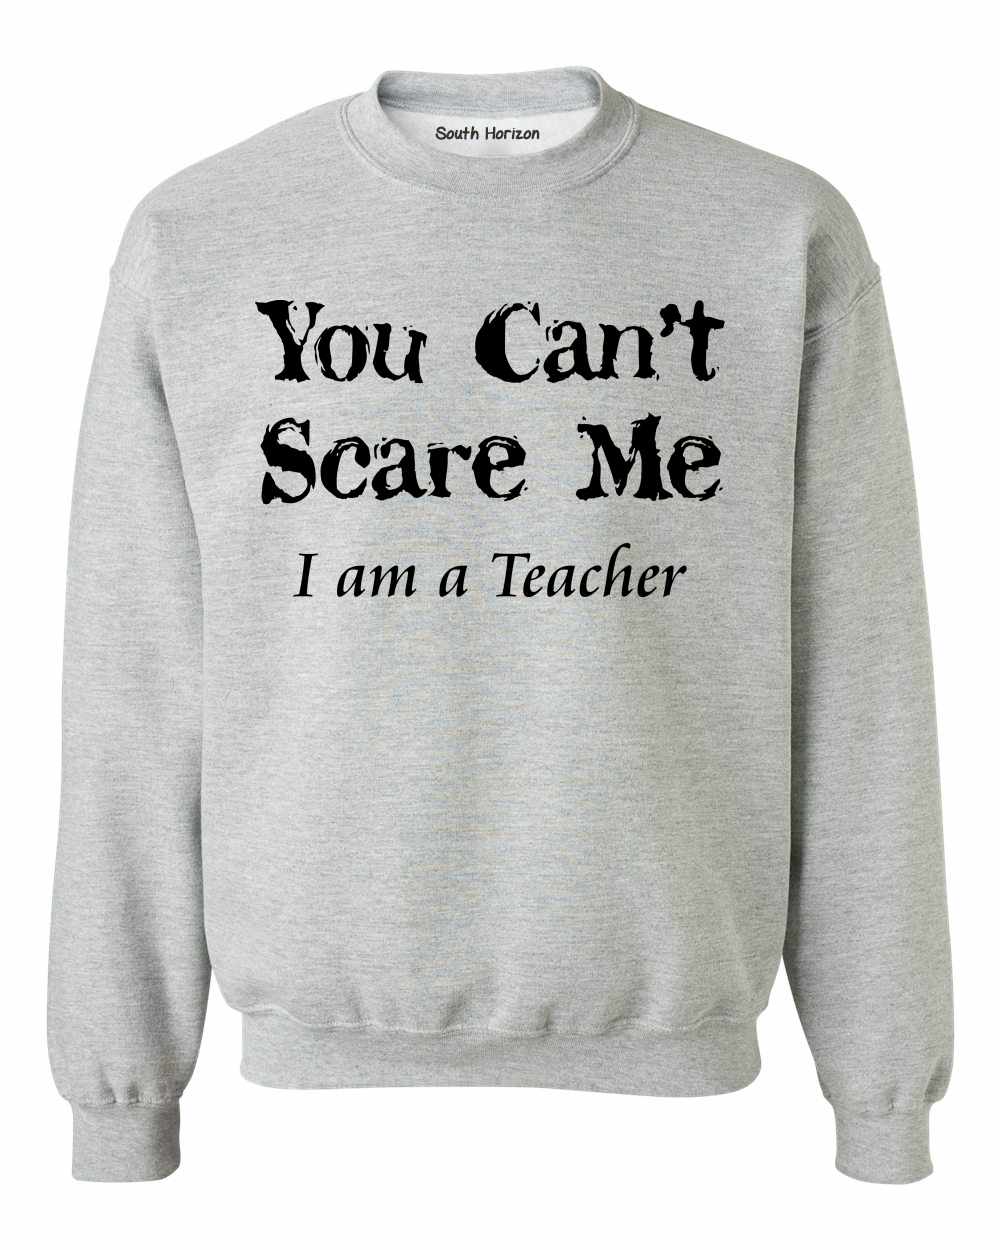 You Can't Scare Me I am a Teacher on SweatShirt